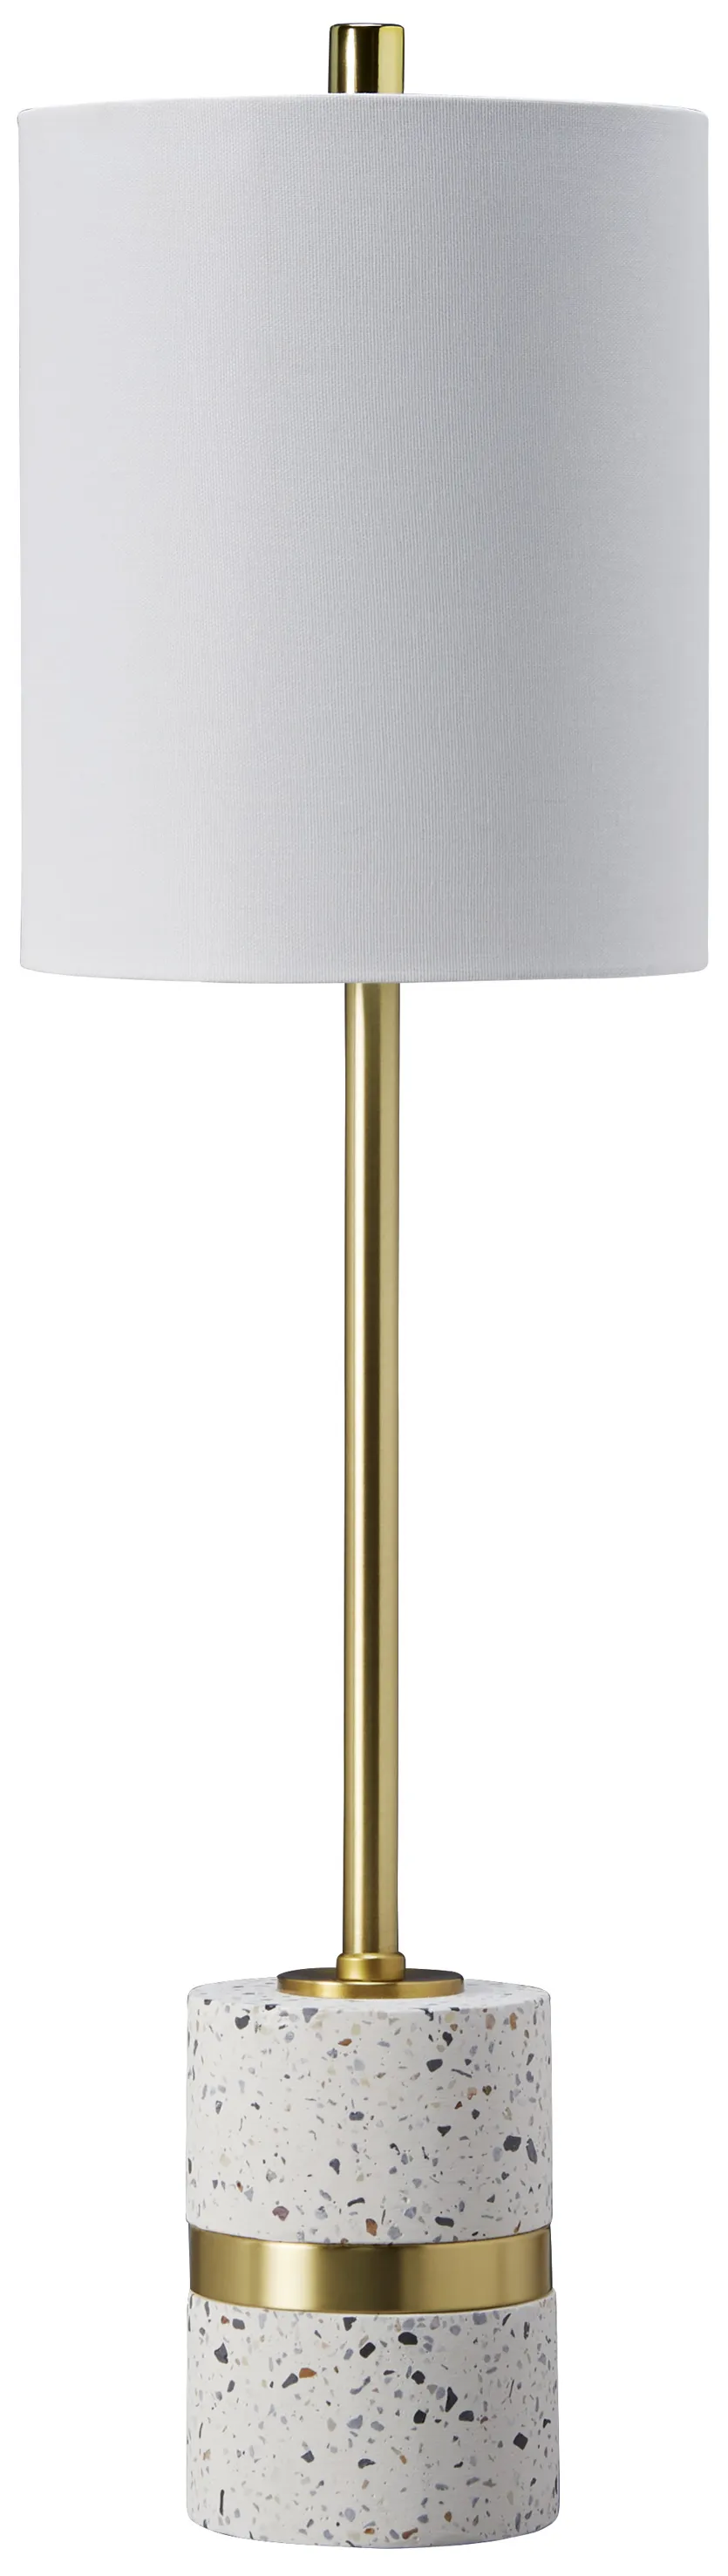 Signature Design by Ashley® Maywick White/Brass Desk Lamp